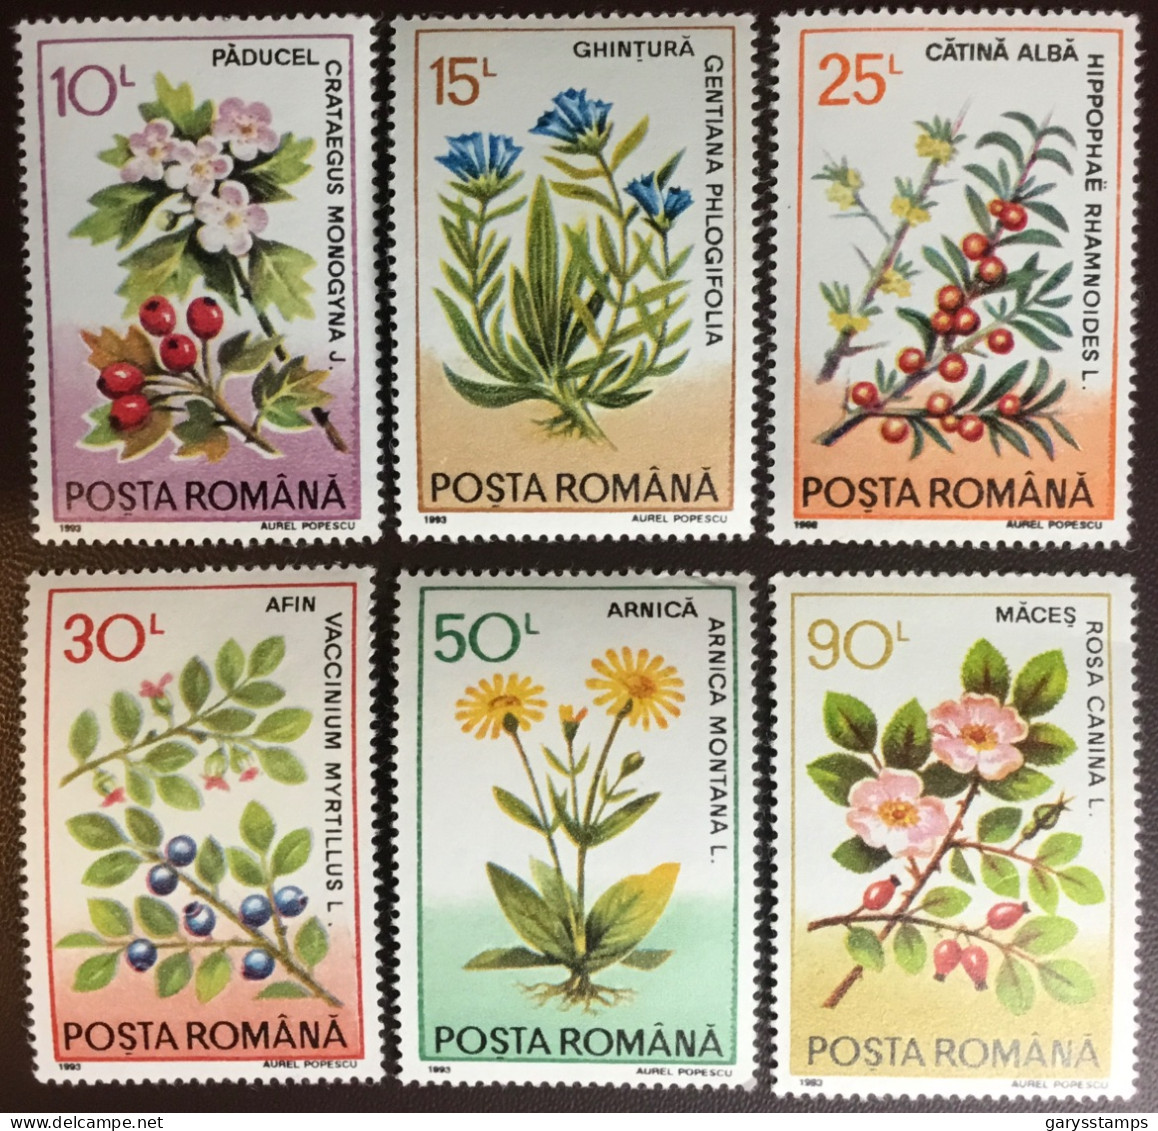 Romania 1993 Medicinal Plants MNH - Piante Medicinali